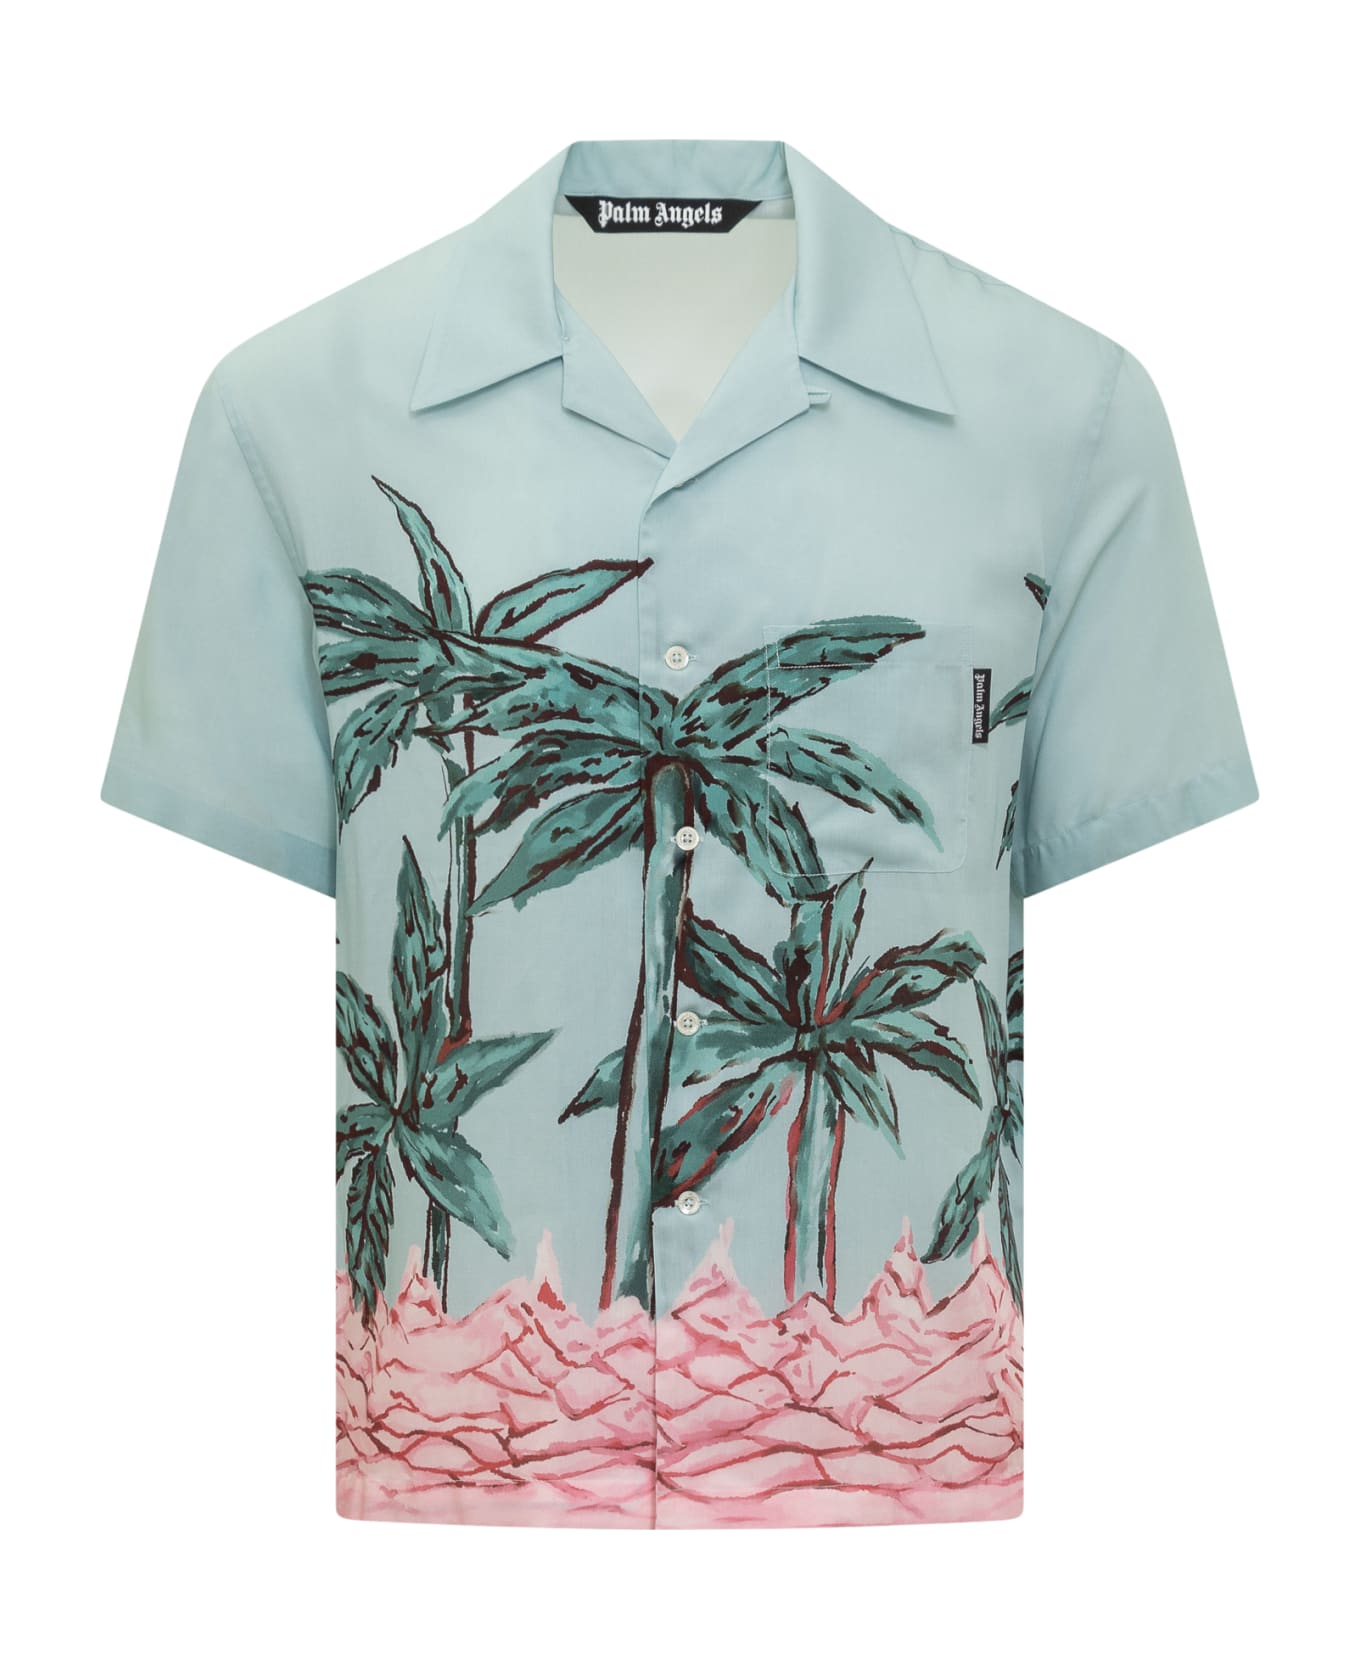 Palm Angels Palm Trees Bowling Shirt - LIGHT BLUE シャツ